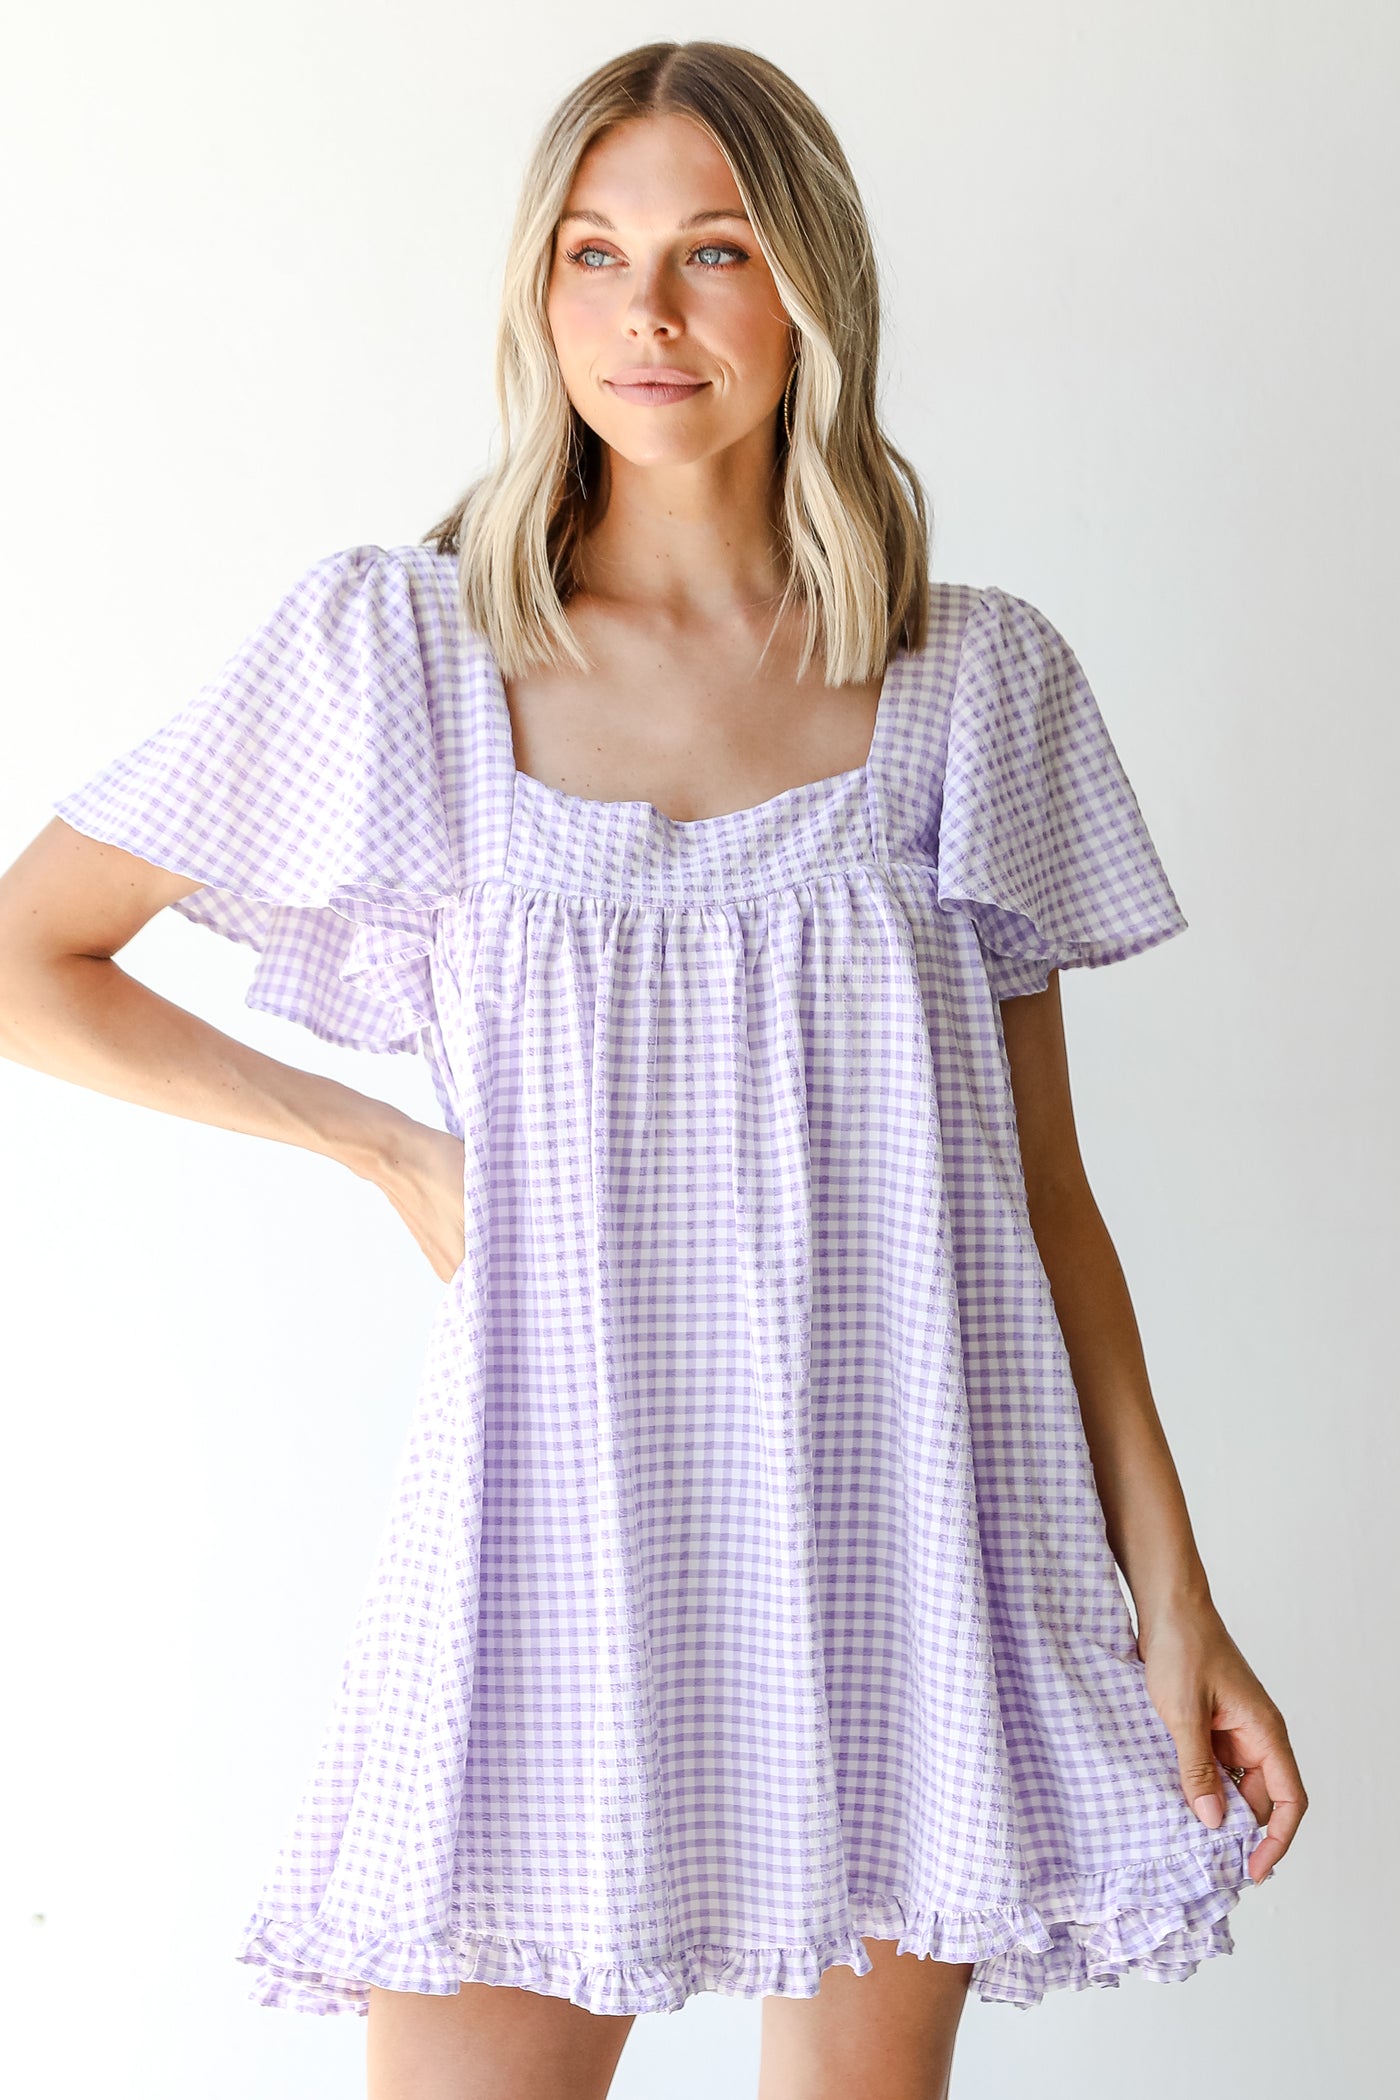 Gingham Mini Dress in lavender